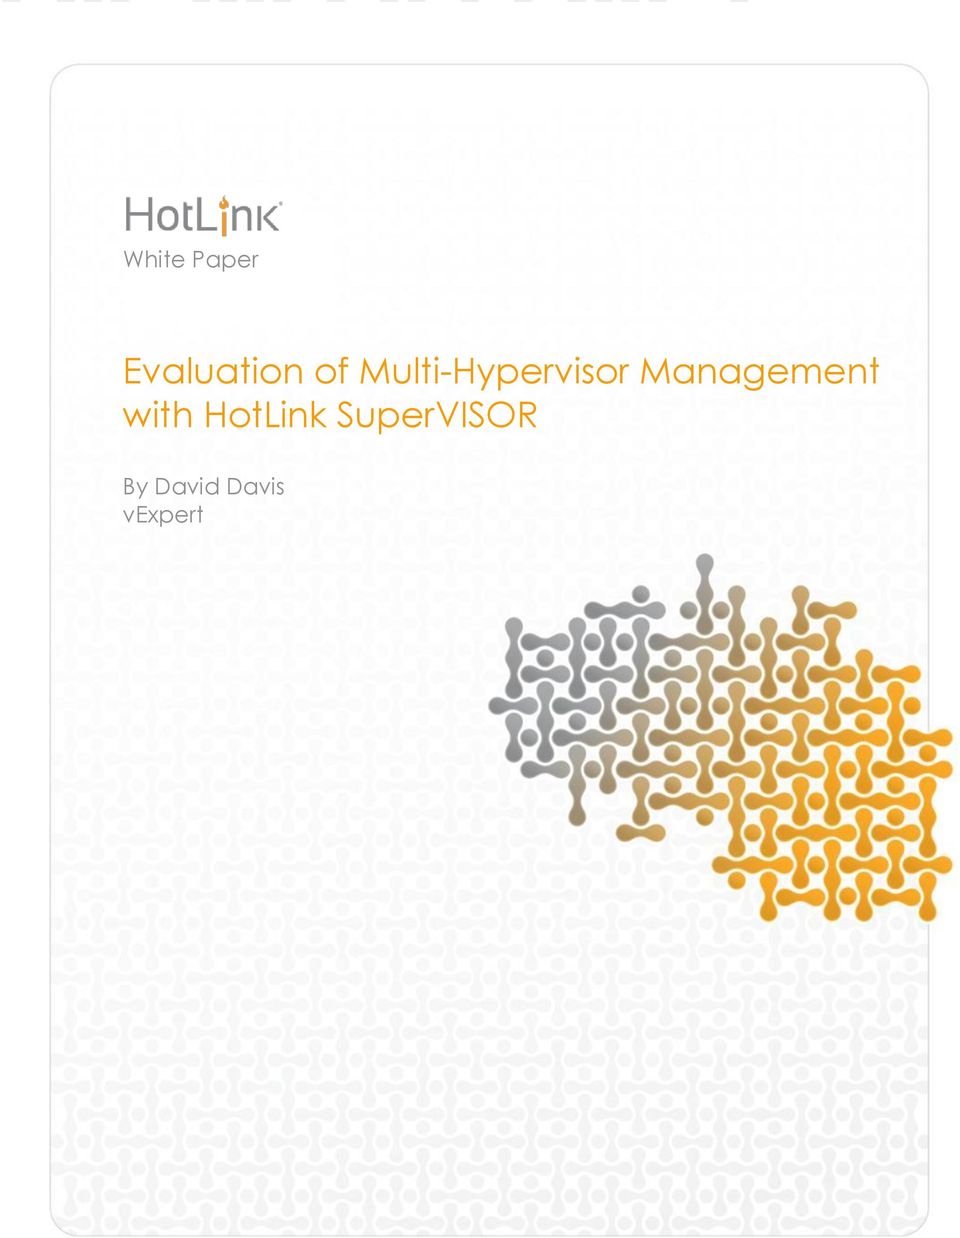 Multi-Hypervisor Management with HotLink